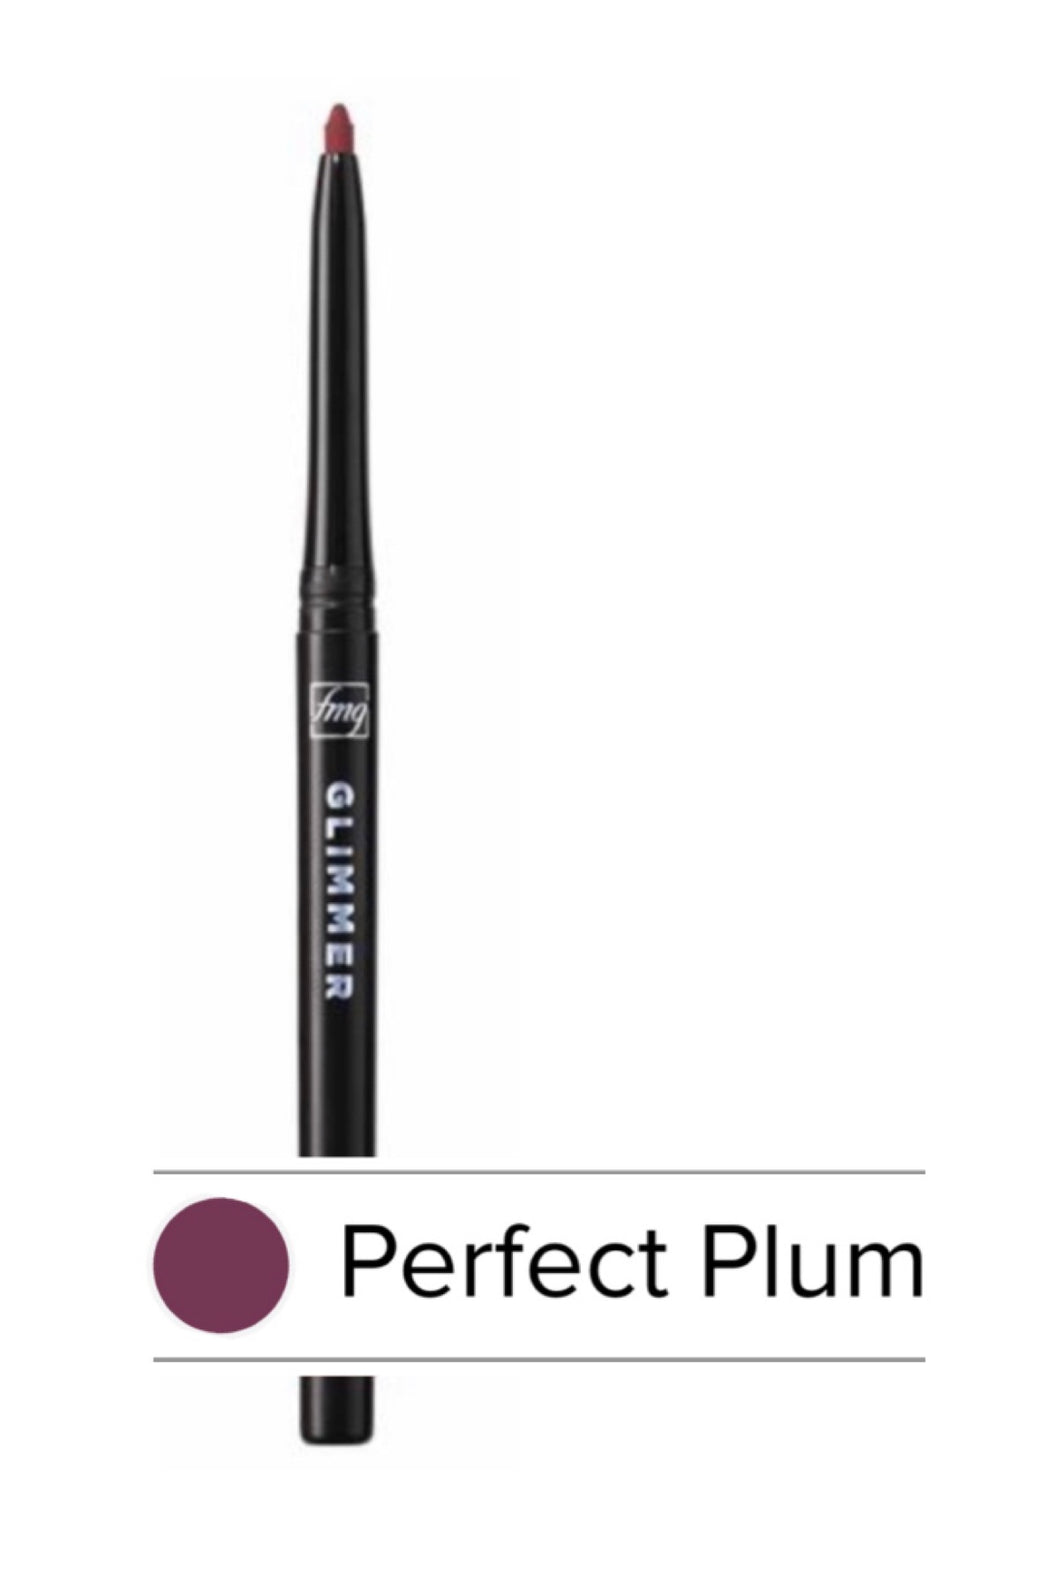 Perfect Plum fmg Glimmerstick Lip Liner